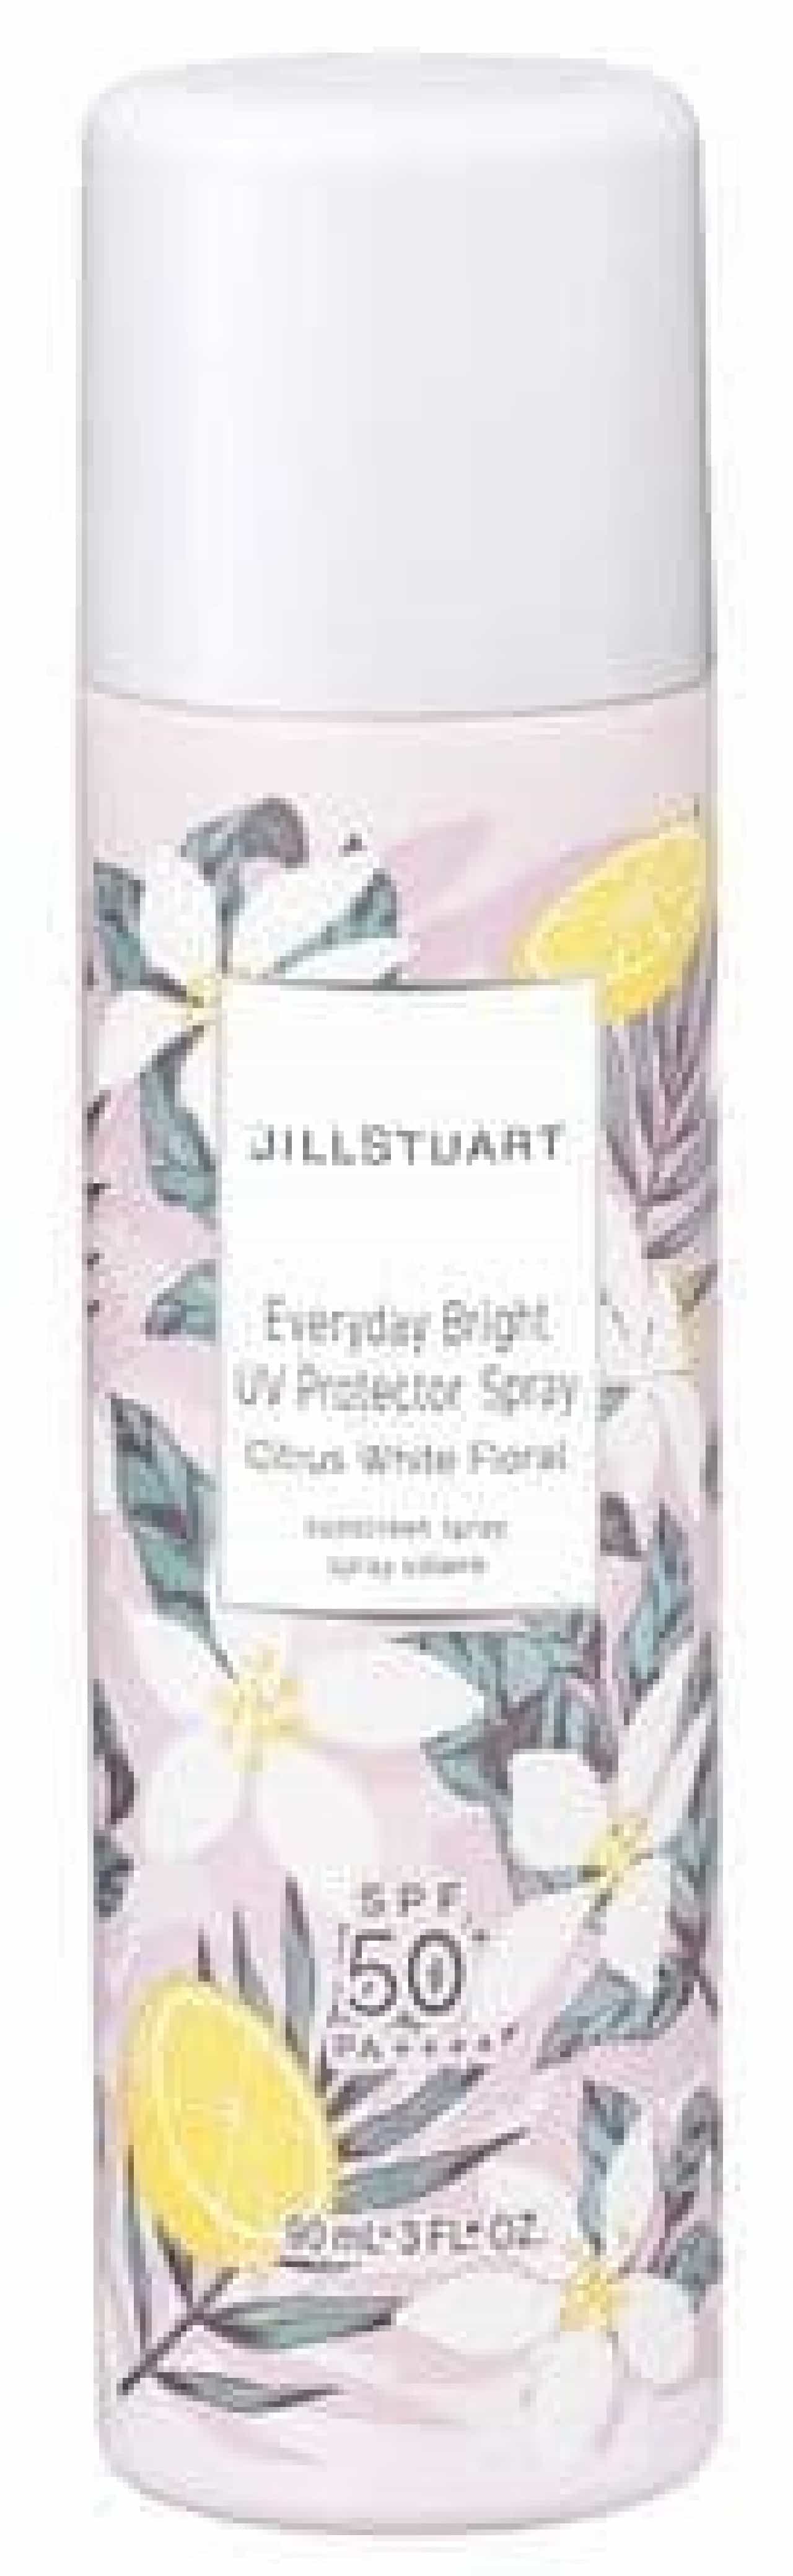 Jill Stuart Everyday Bright UV Protector Spray Citrus White Floral